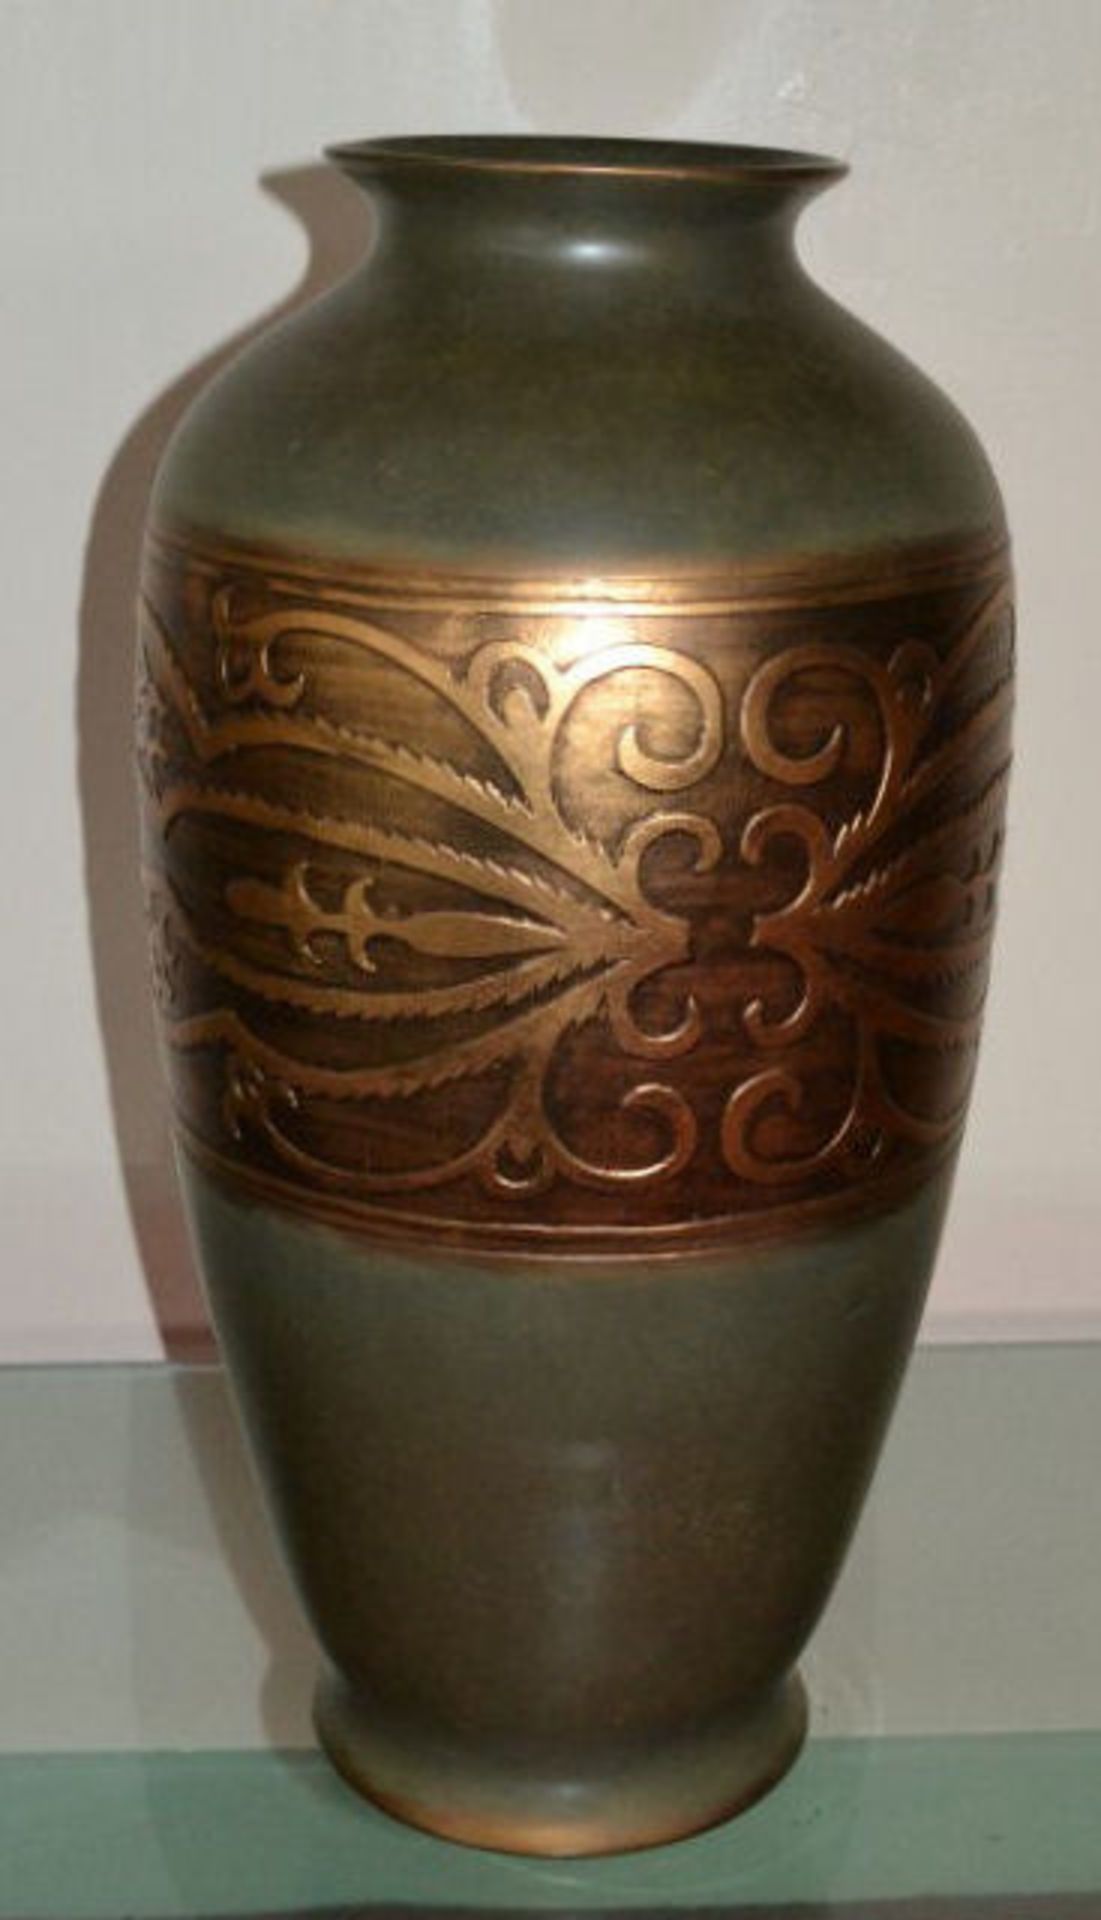 5 Assorted Decorative Vases - See Description For Details - Image 17 of 19